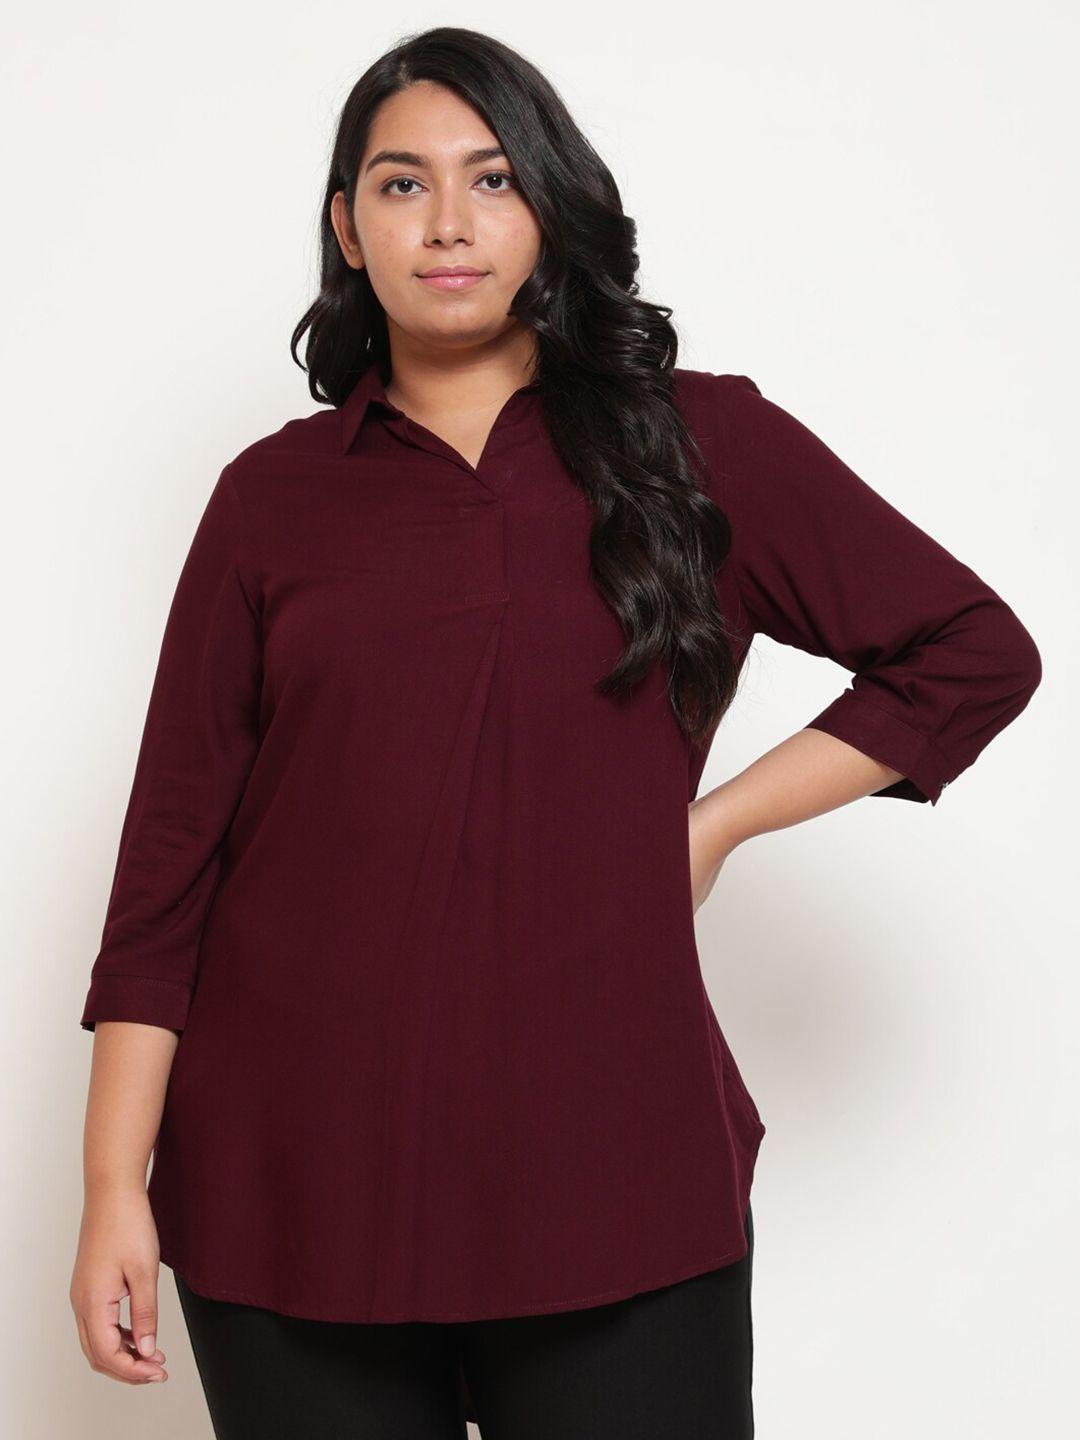 amydus plus size women maroon shirt style top